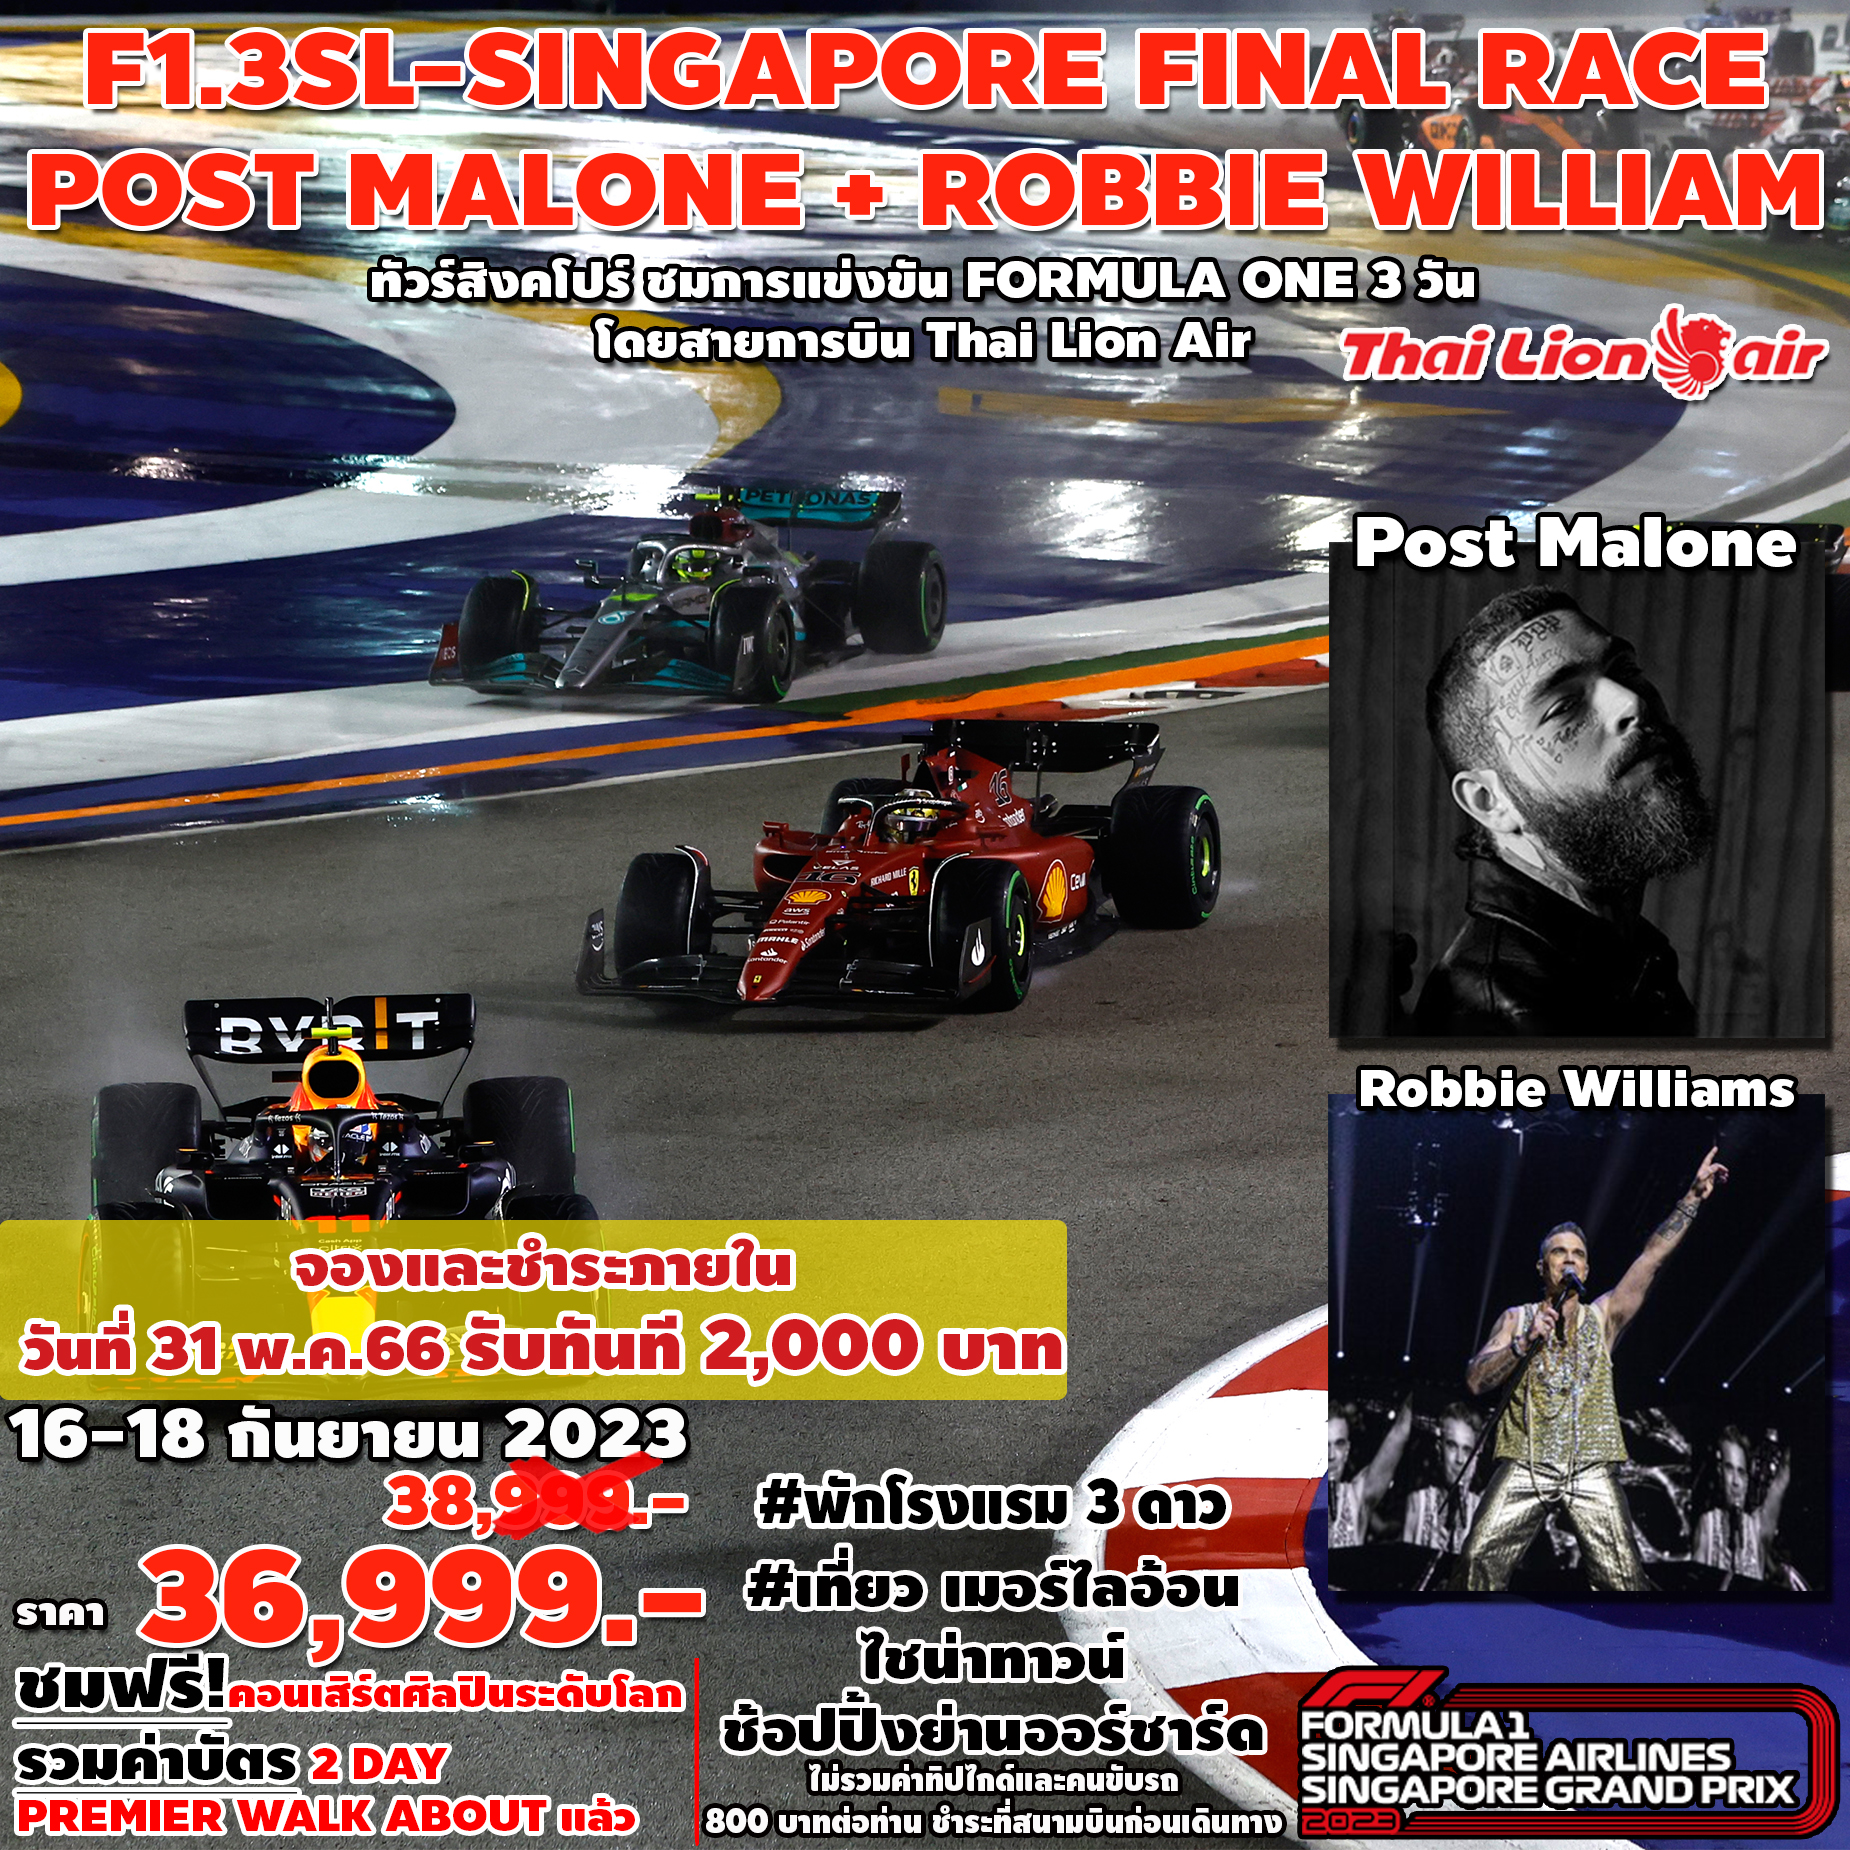 SPHZ- F1.3SL FINAL RACE+POST MALONE+ROBBIE WILLIAM 3D2N 16-18 SEP 2023